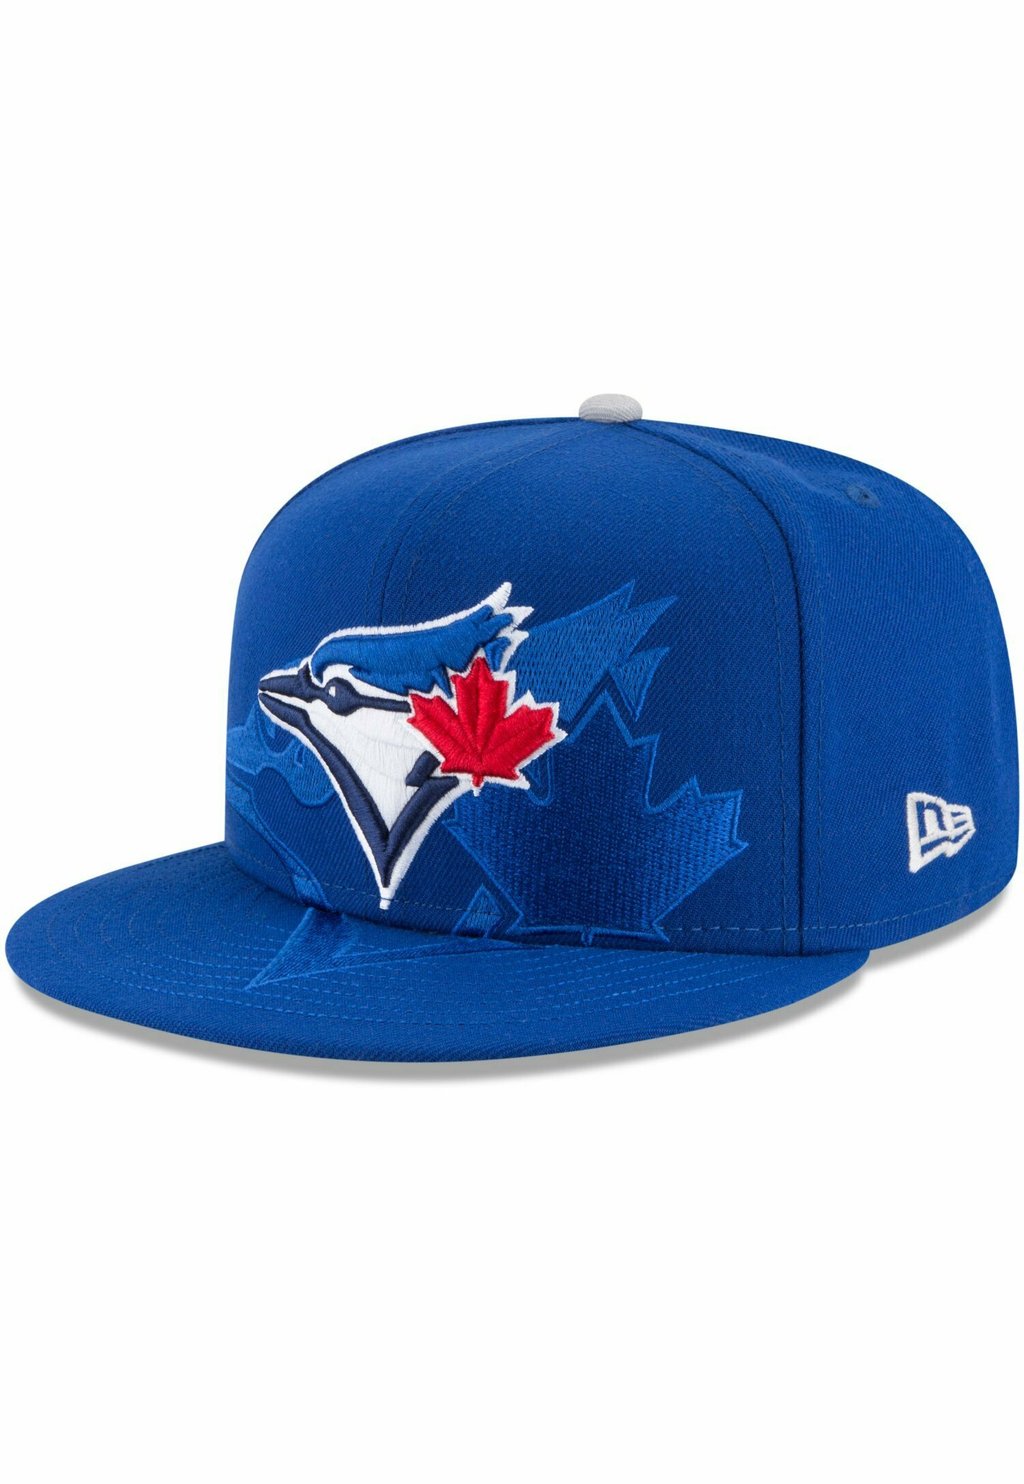 Бейсболка 59FIFTY SPILL LOGO MLB TEAMS New Era, цвет toronto blue jays цена и фото